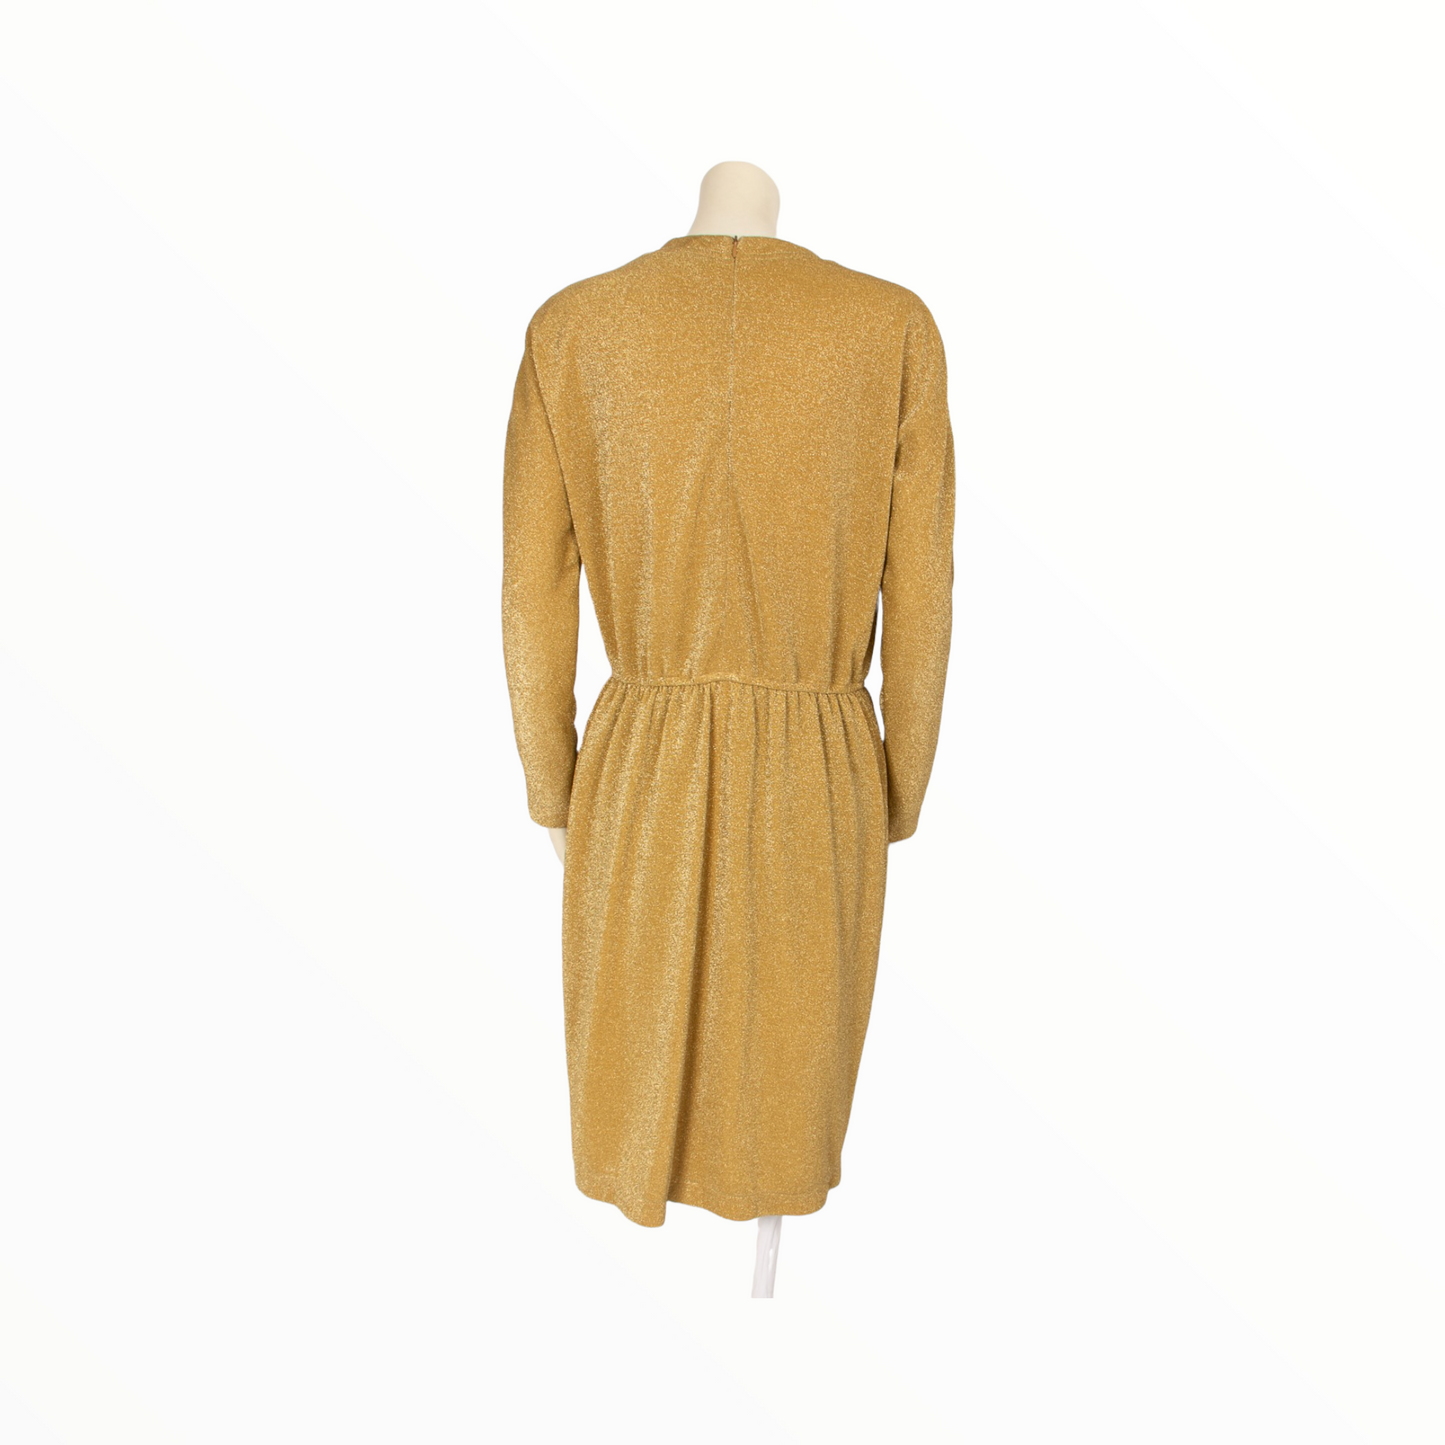 Escada vintage long sleeved dress in gold lurex - M - 1990s